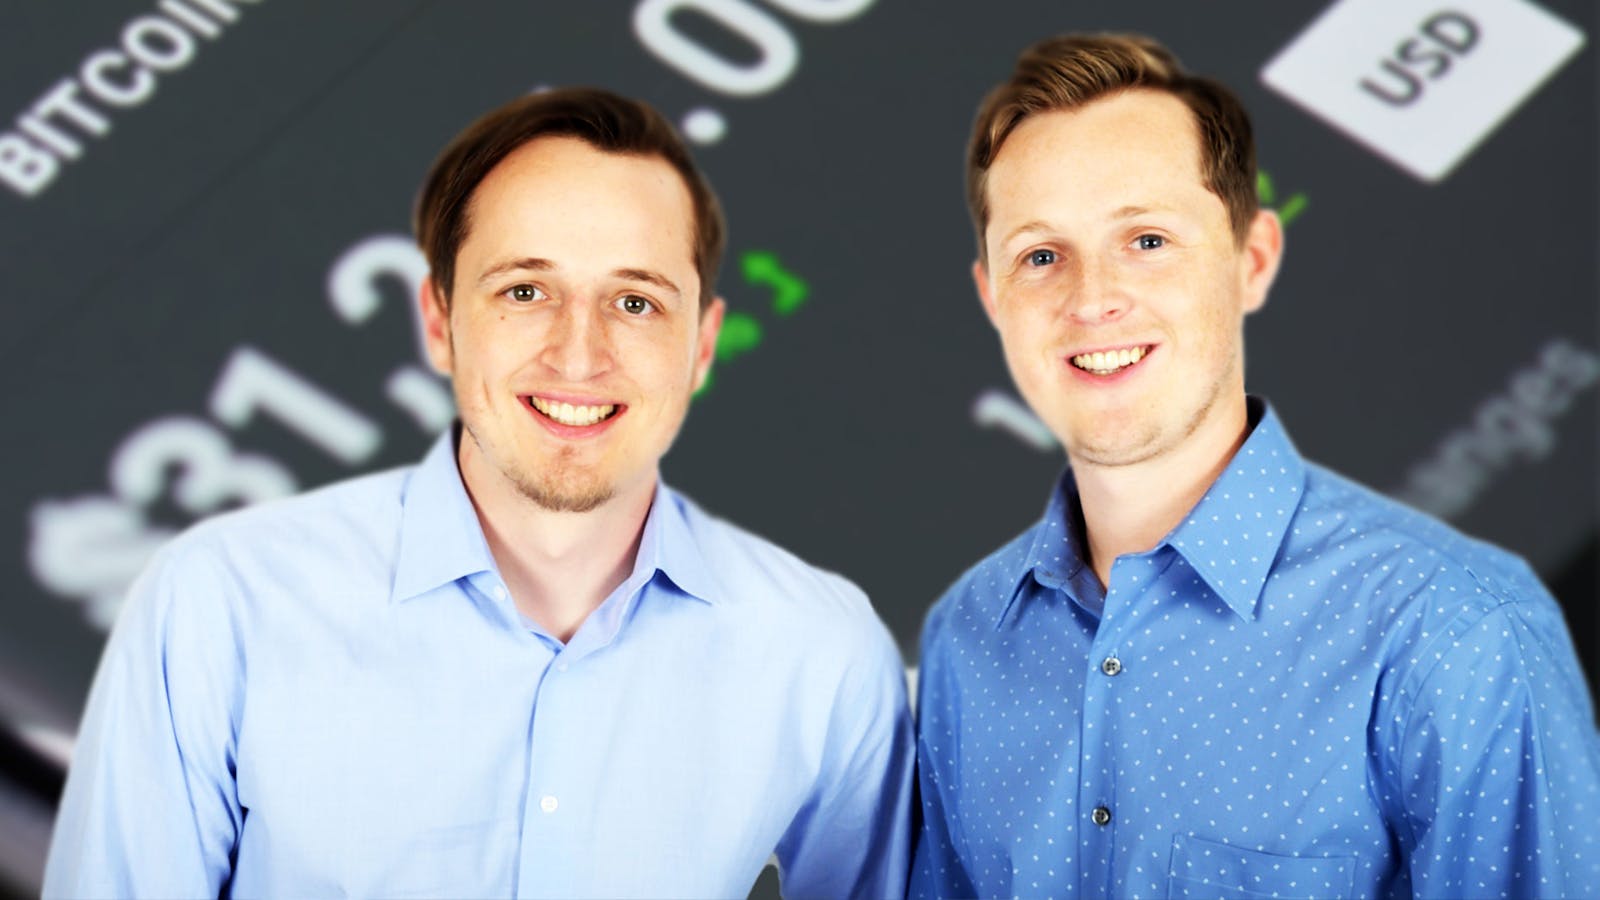 TaxBit co-founders Justin Woodward (left) and Austin Woodward (right). Photo: TaxBit, Shutterstock.